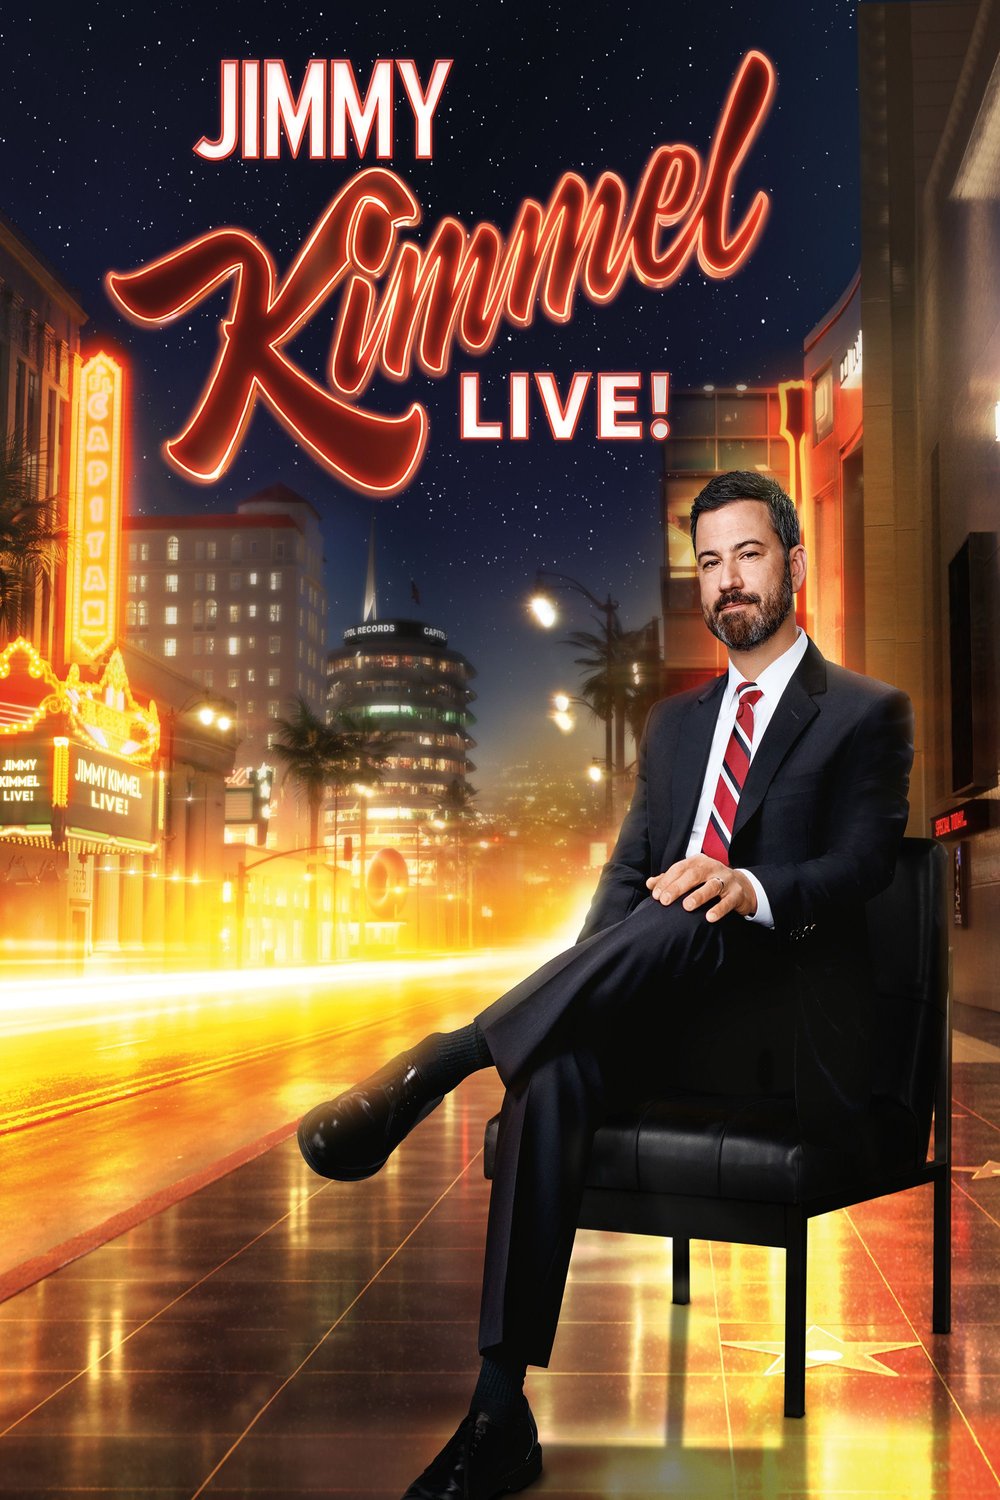 L'affiche du film Jimmy Kimmel Live!